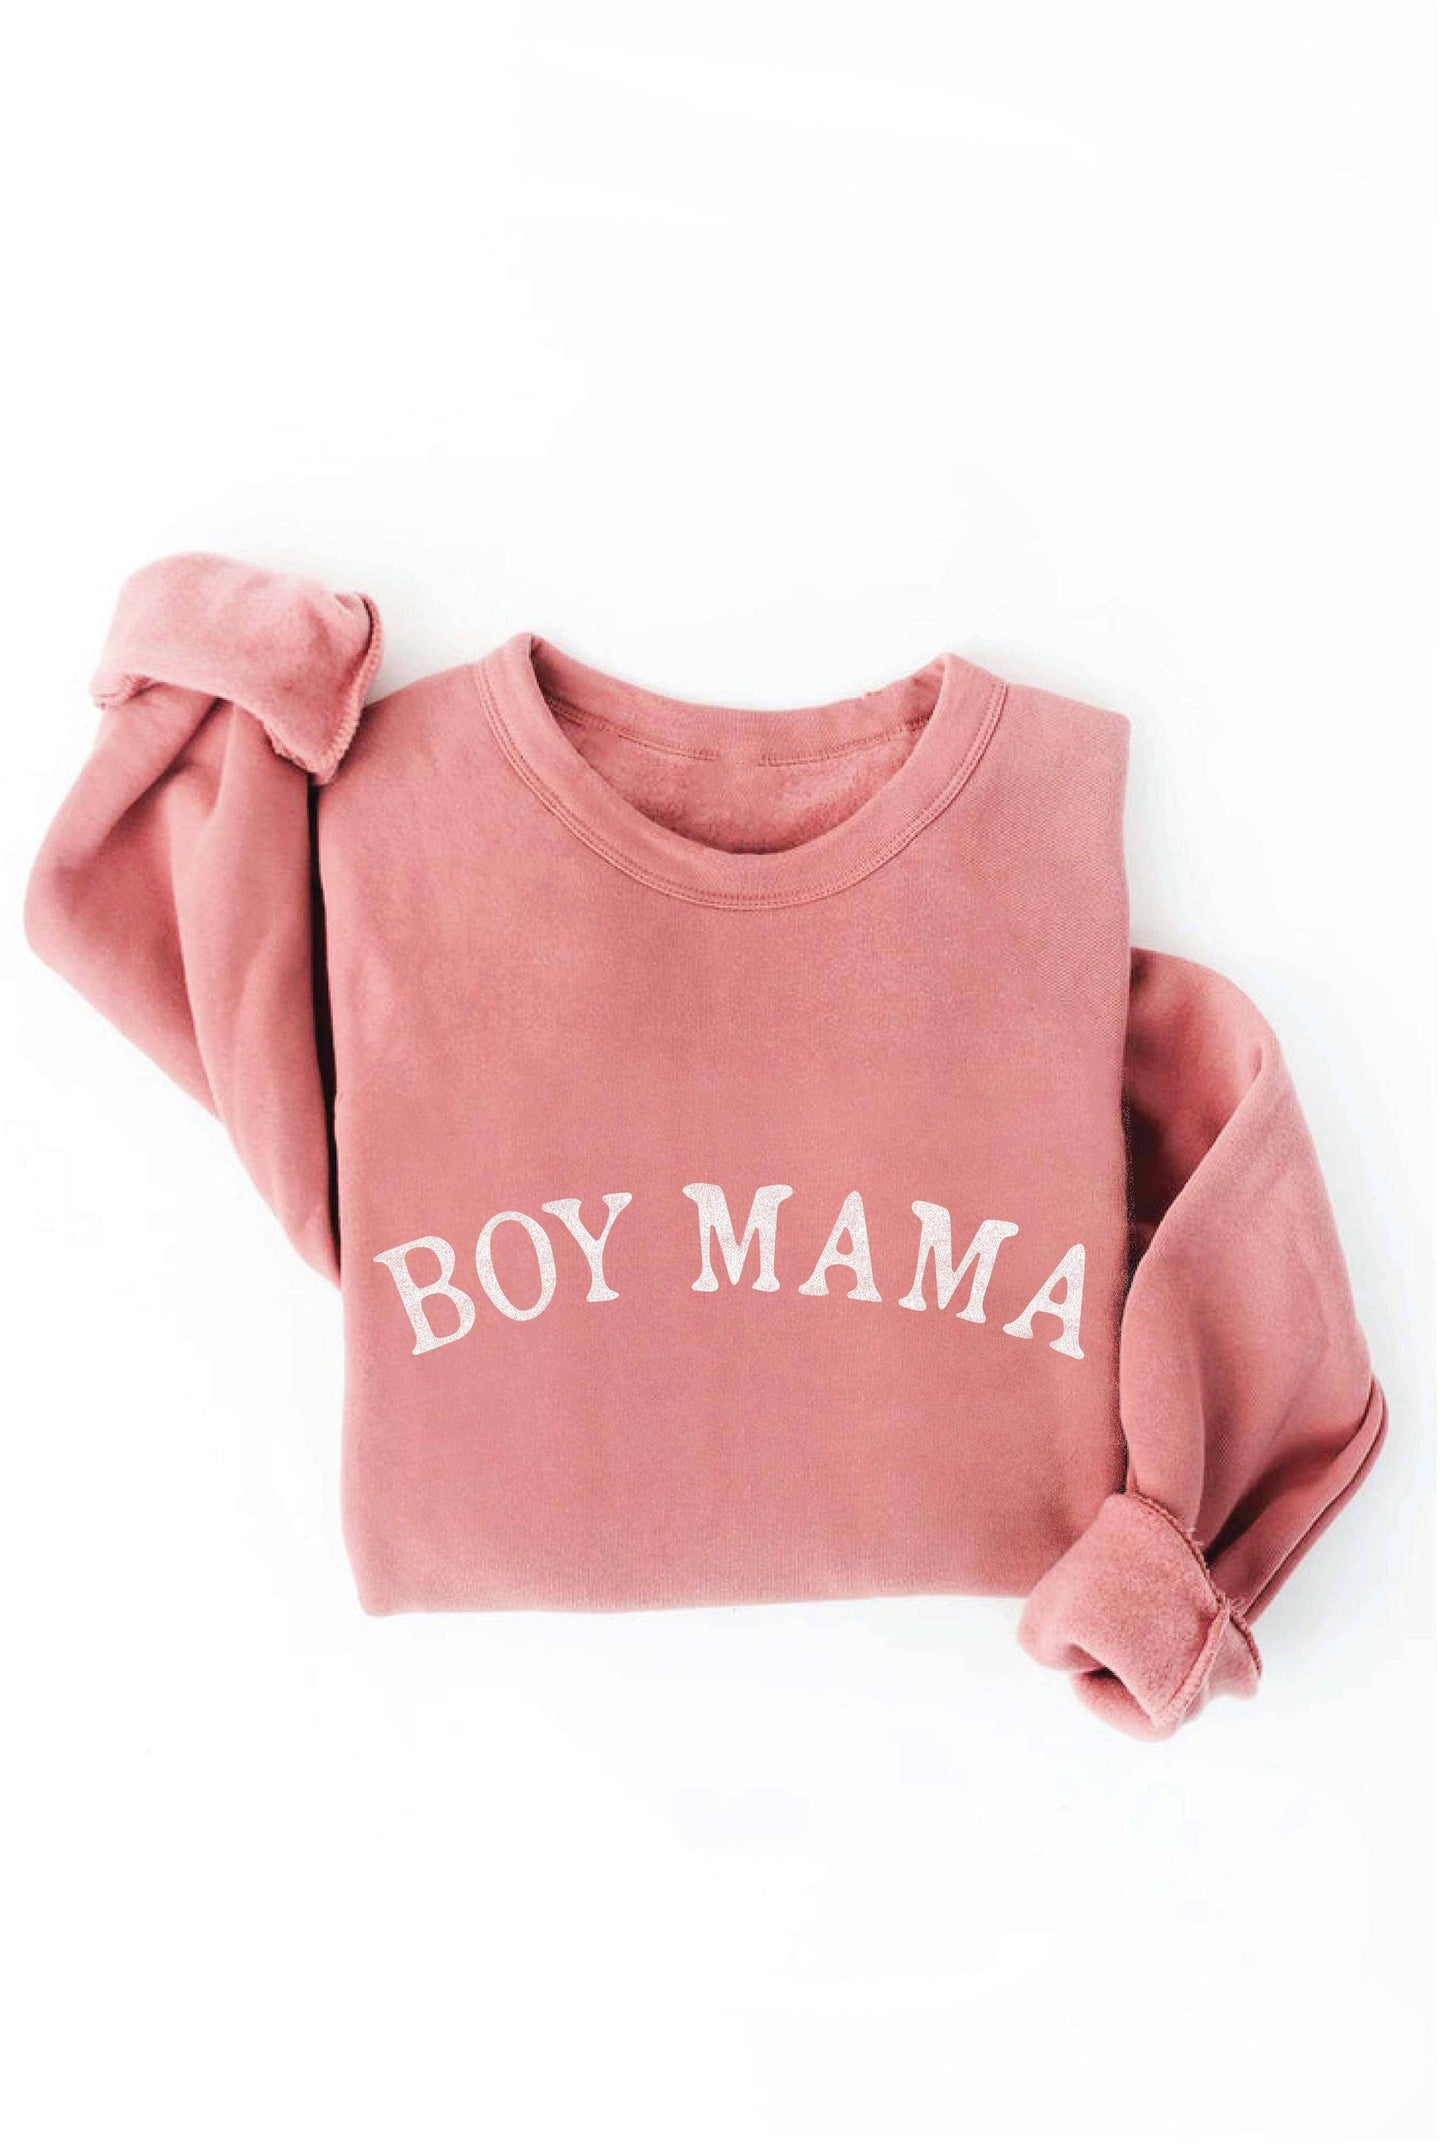 BOY MAMA Graphic Sweatshirt: XL / HEATHER DUST